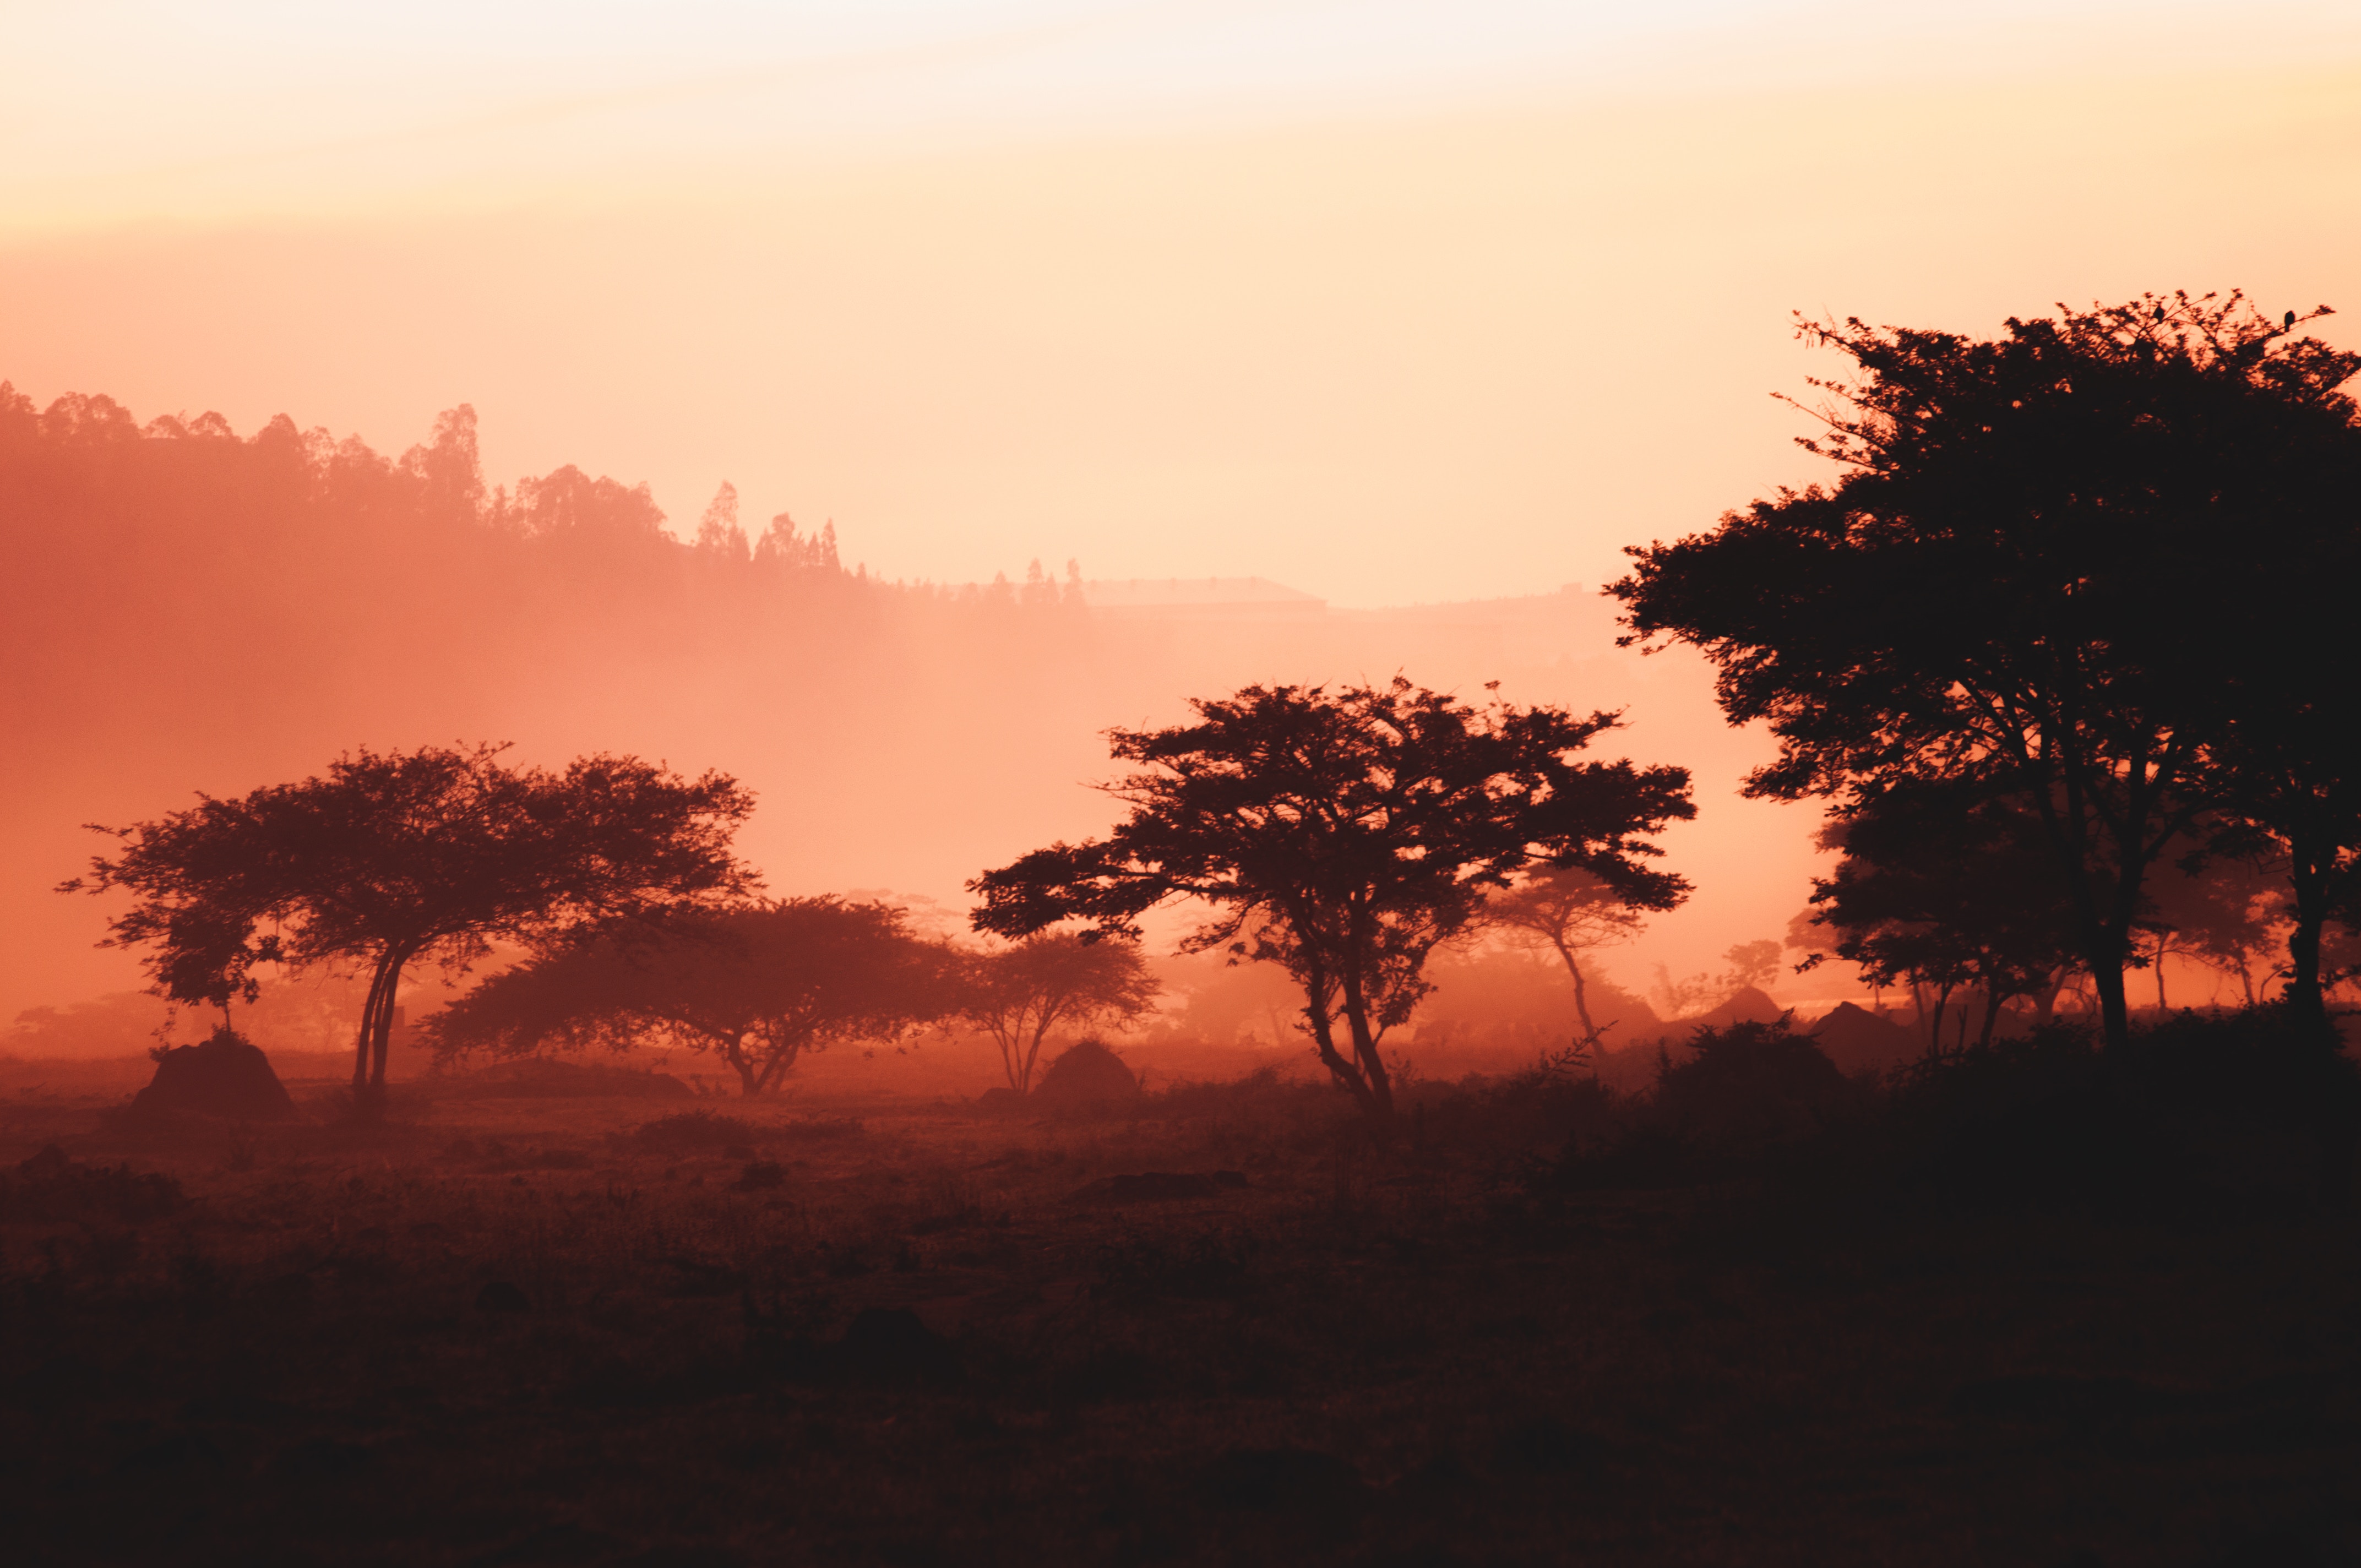 Sunrise on the Sahara in Kigali, Rwanda. Credit to Maxime Niyomwungeri.